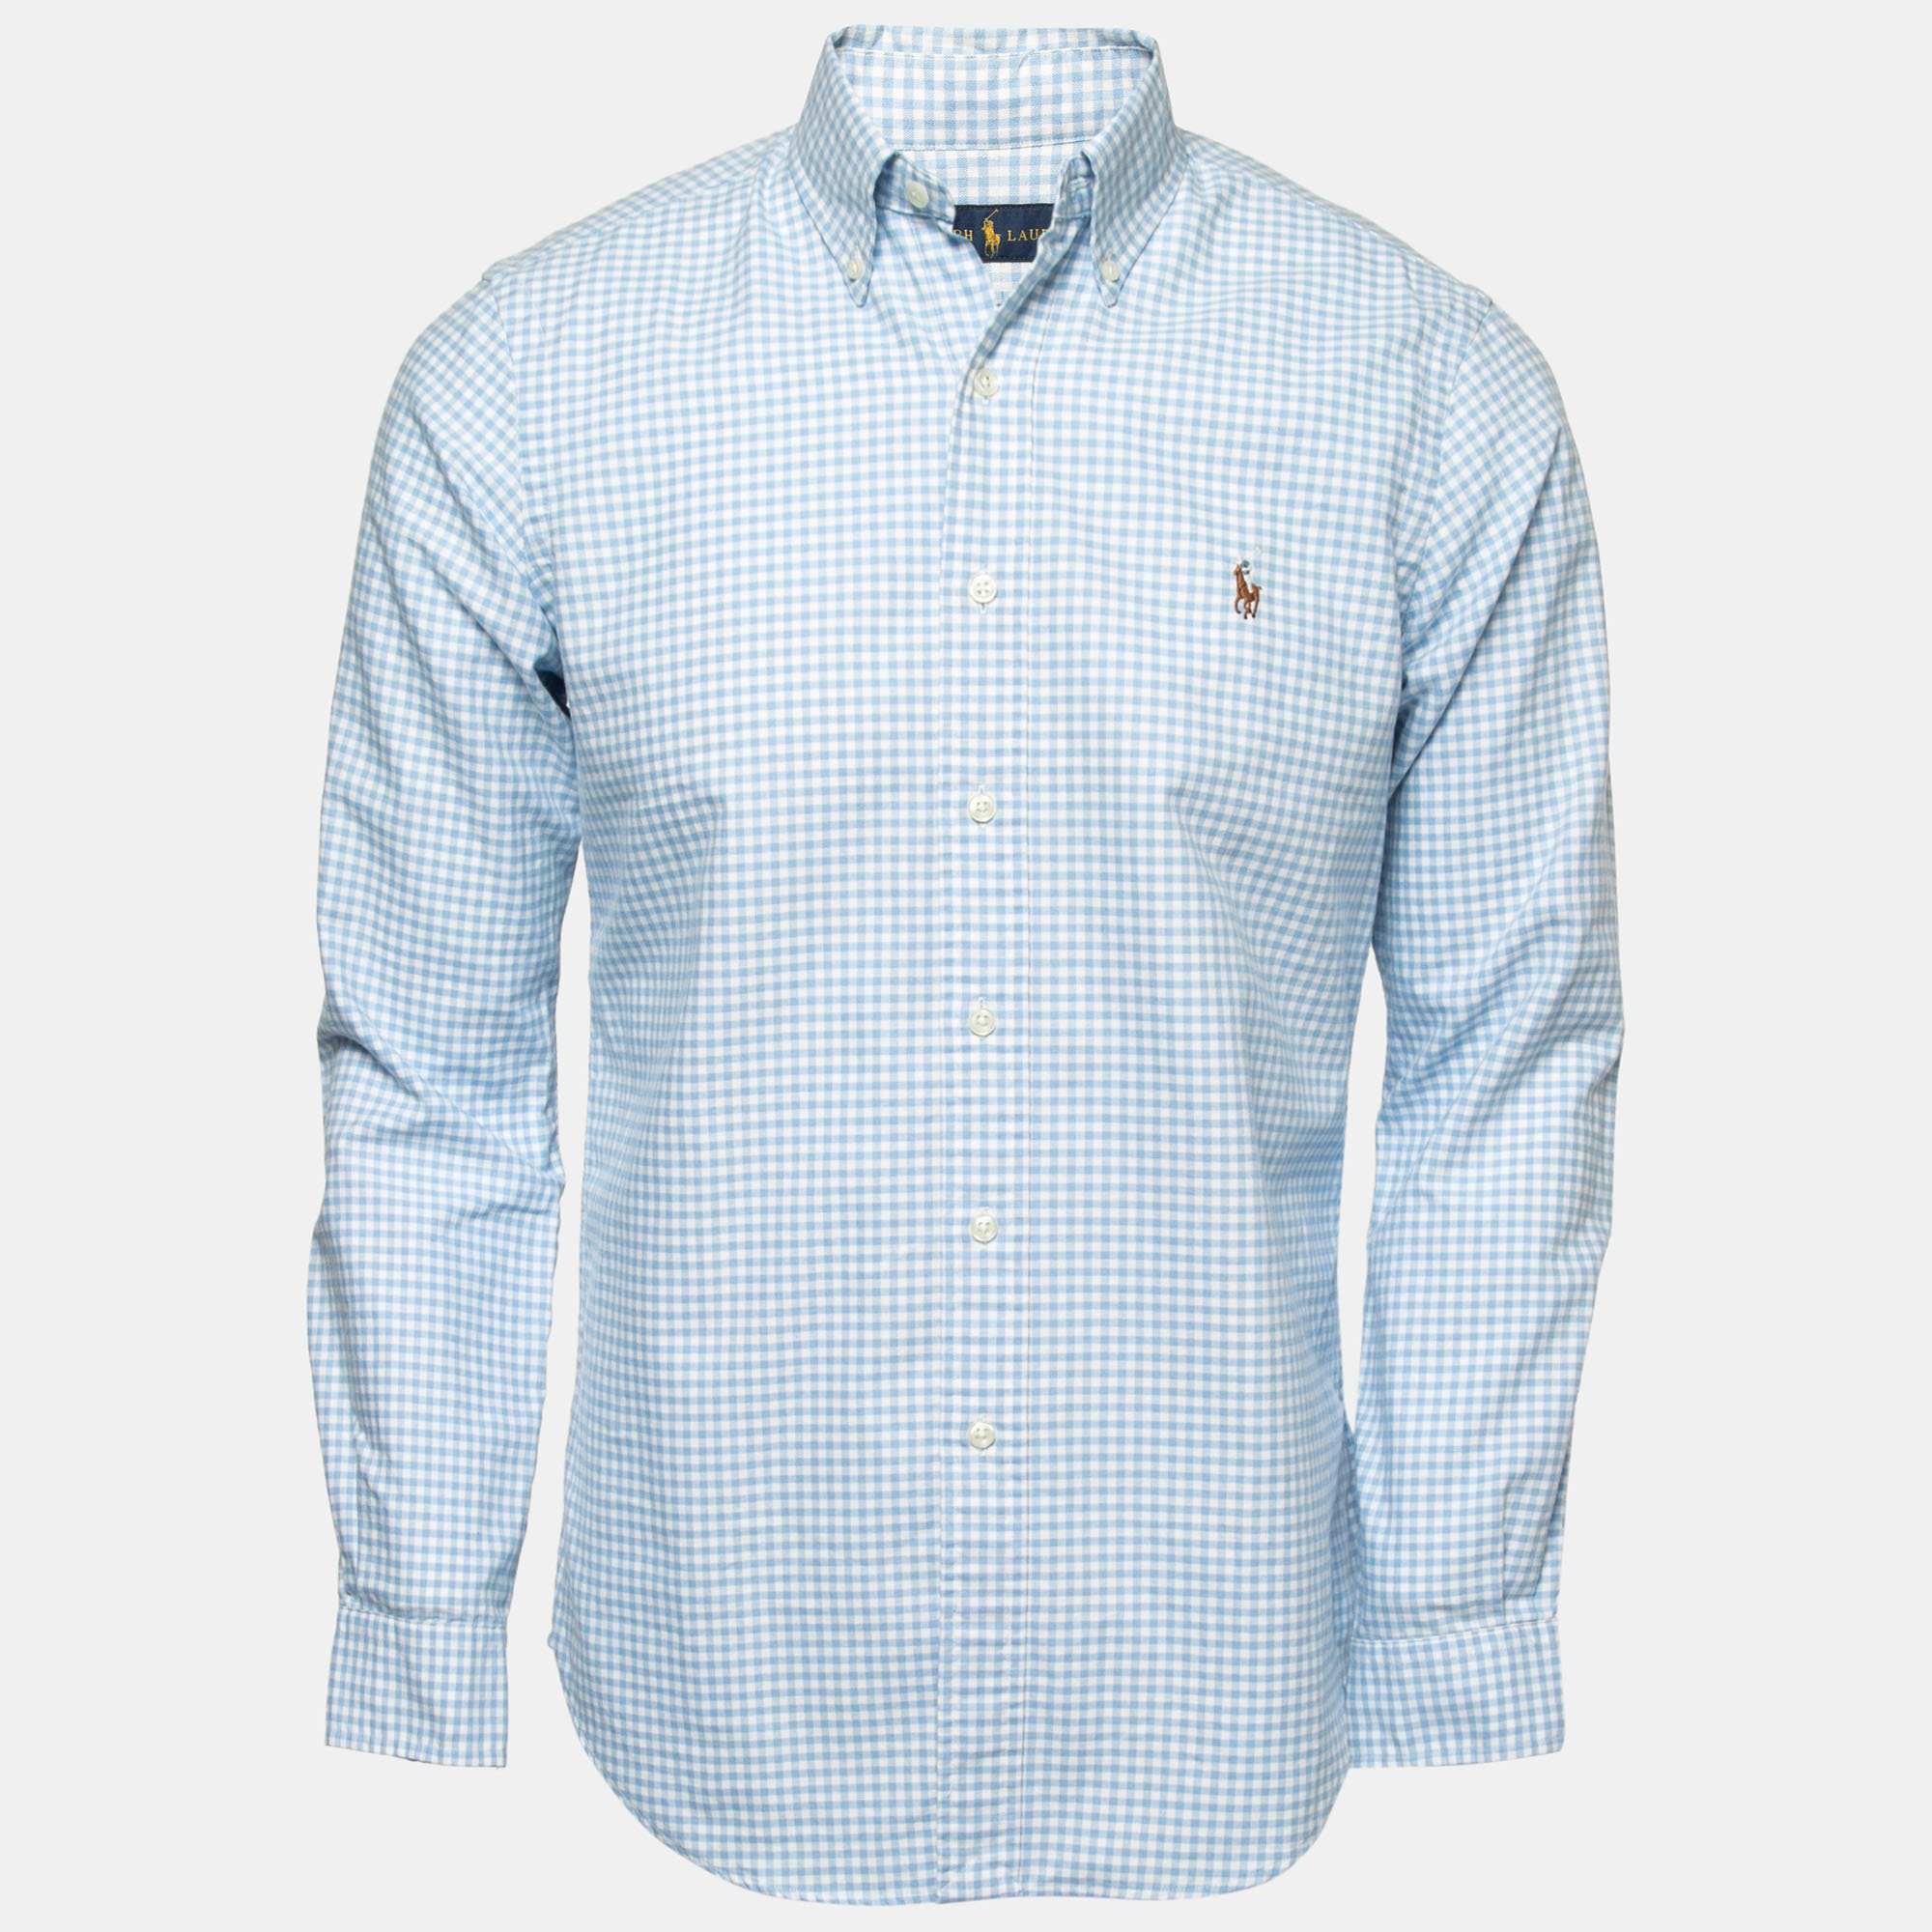 Pre-owned Ralph Lauren Blue Gingham Check Cotton Button Down Shirt S